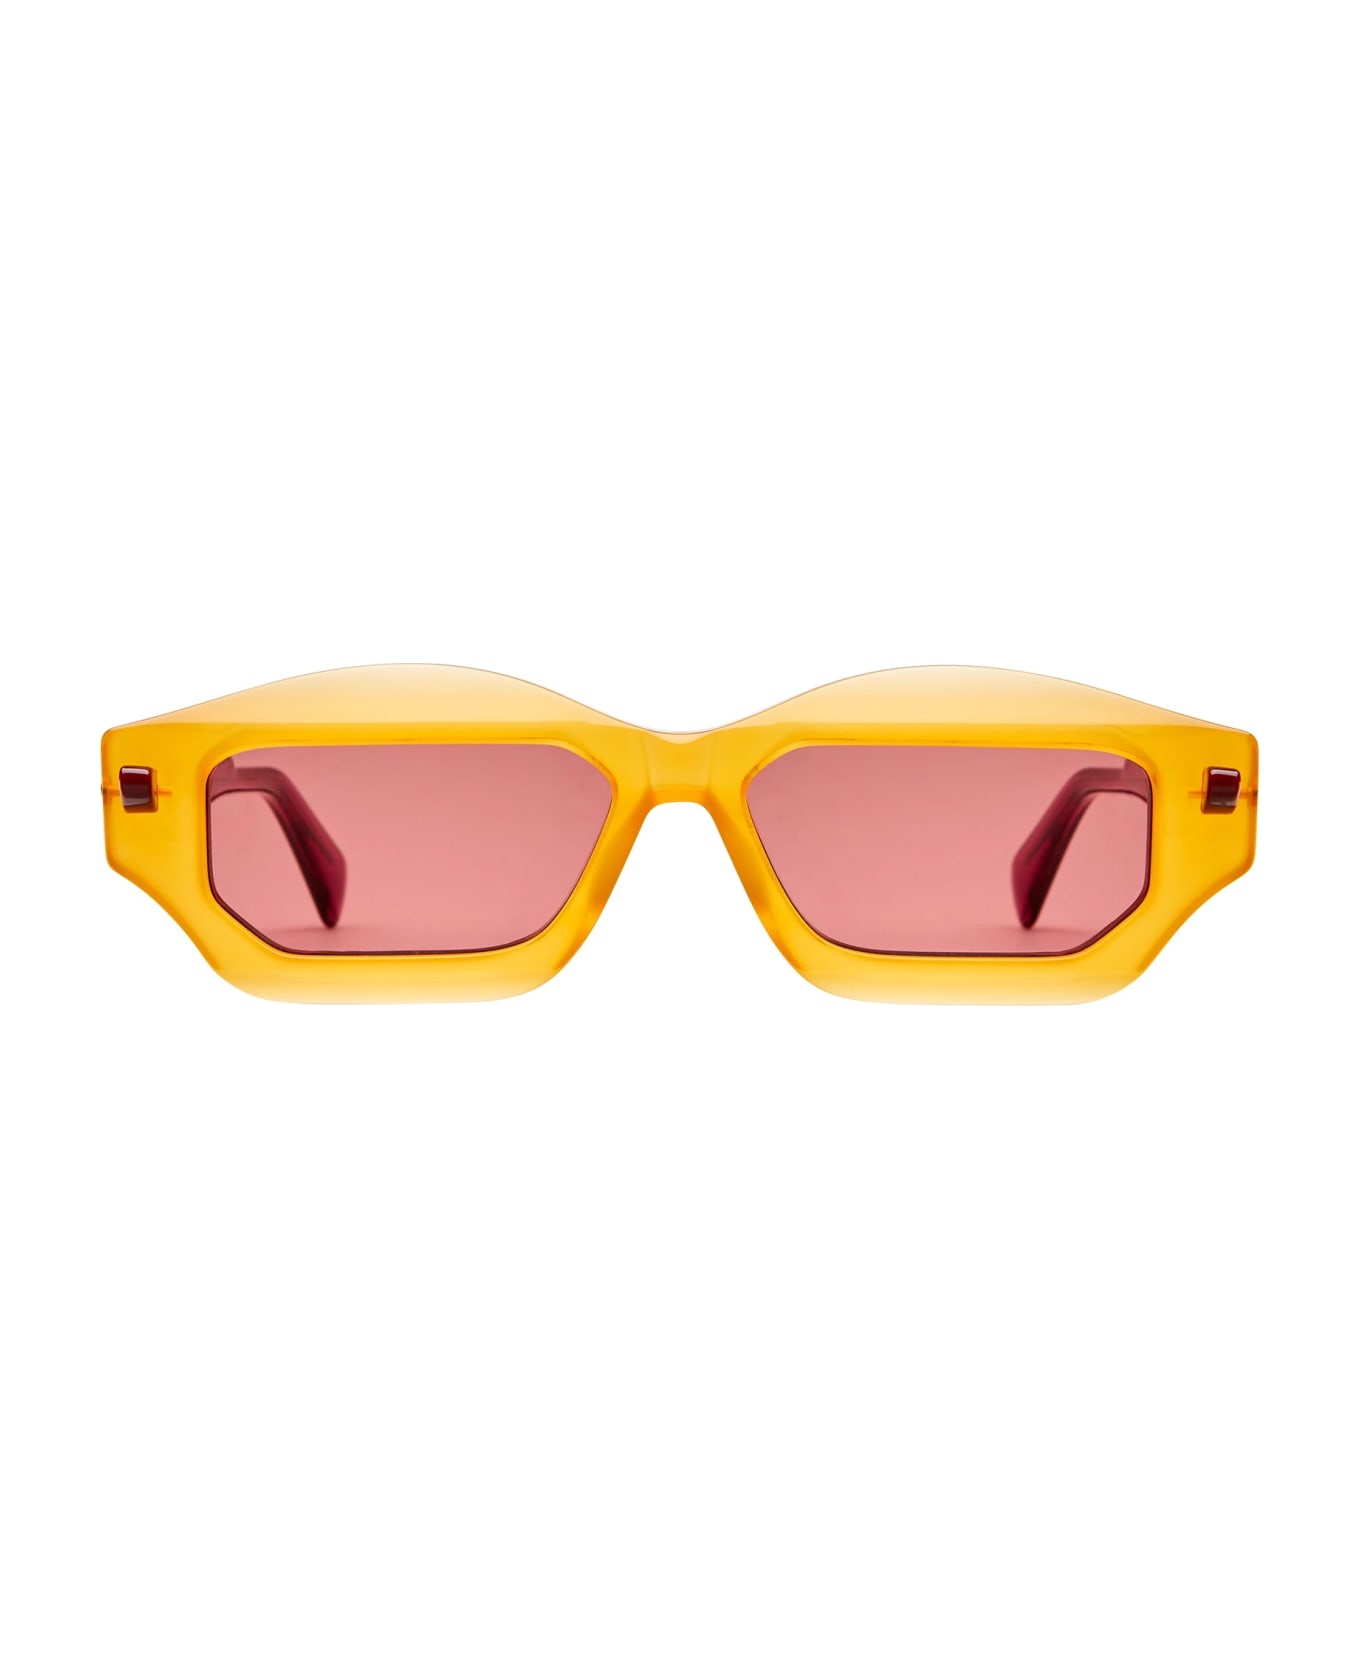 Kuboraum Mask Q6 - Orange Sunglasses - orange/pink